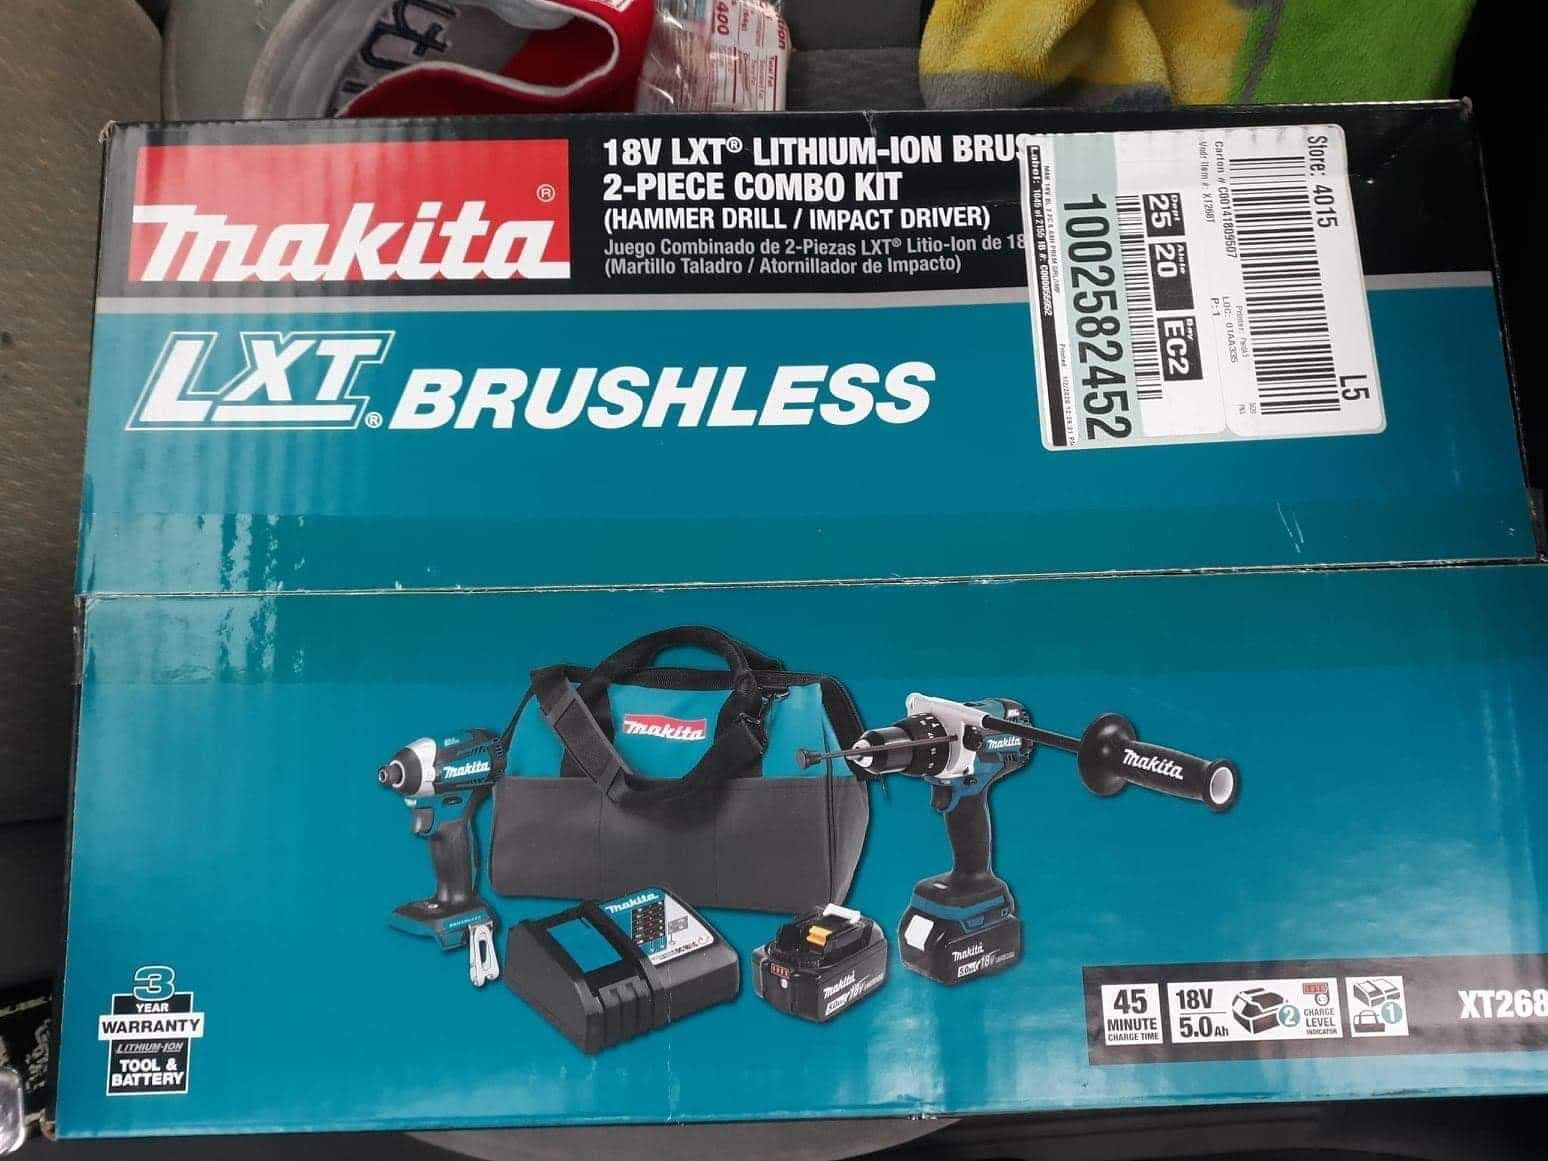 Makita brushless 18v 2-piece combo kit w/ Hammer Drill & Impact Driver